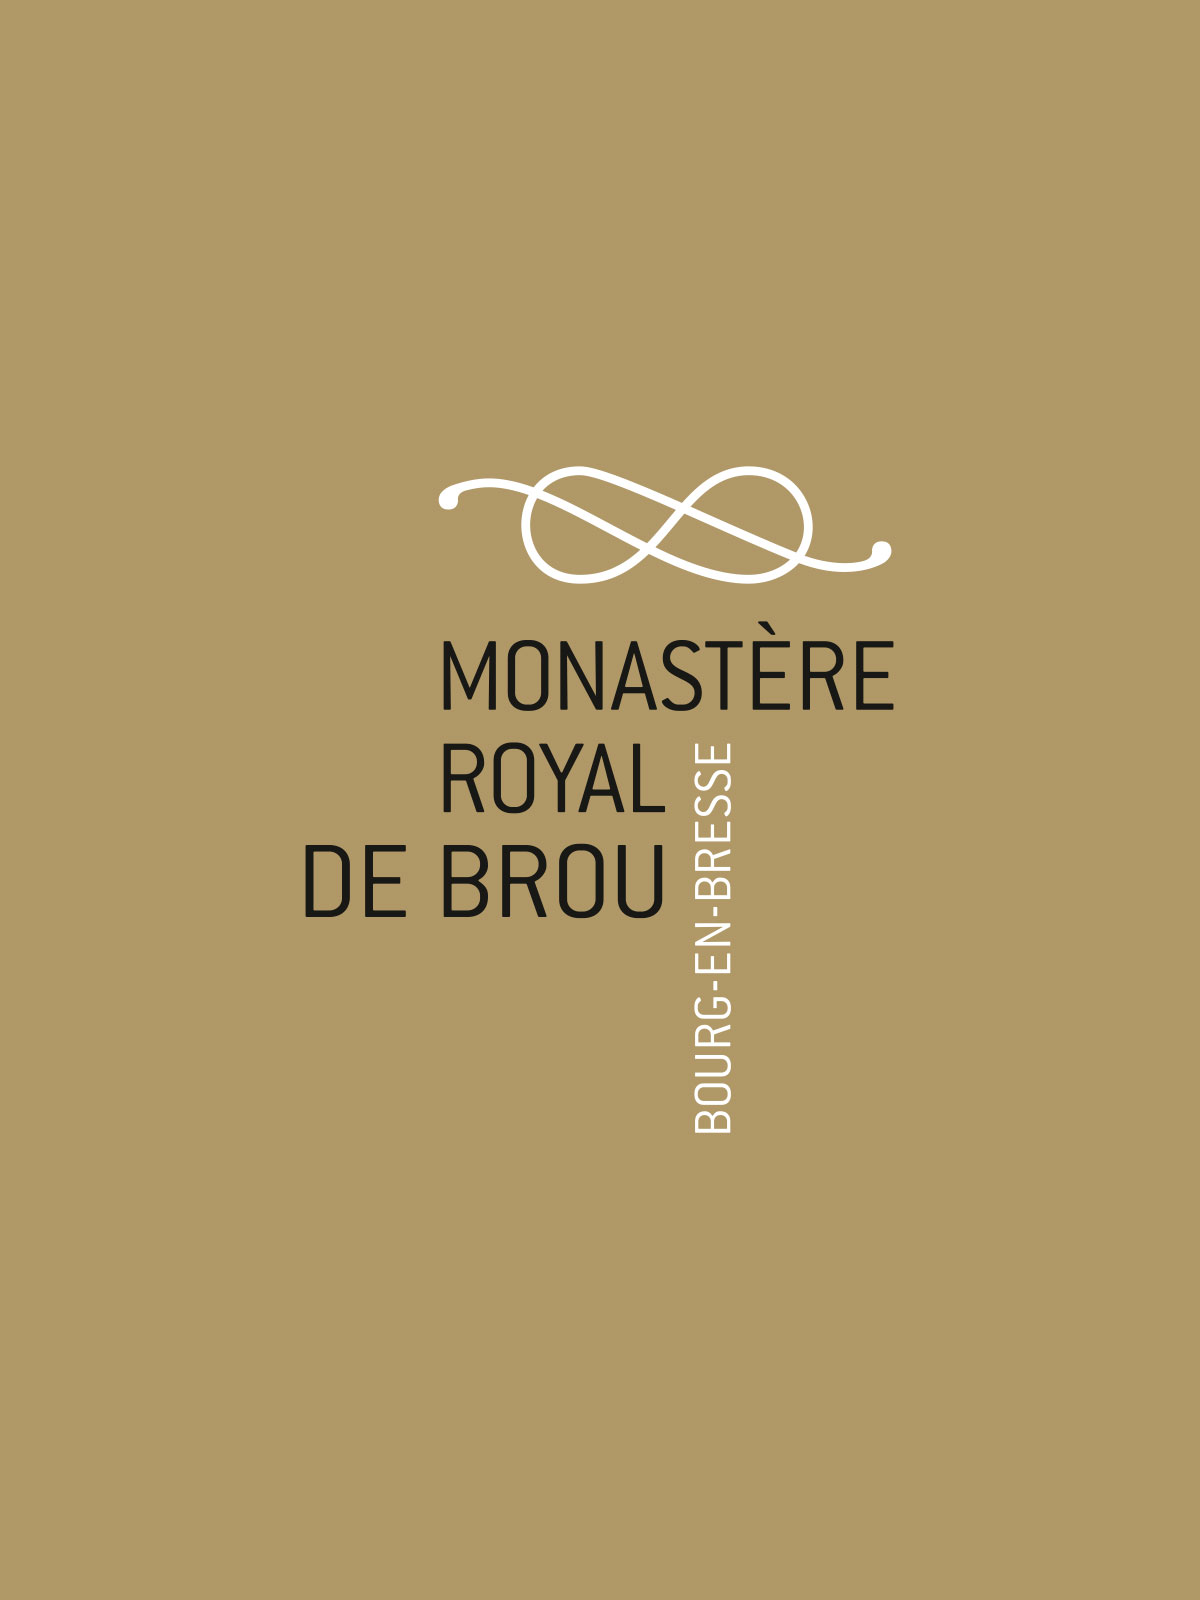 monastere_brou_identite_1.jpg